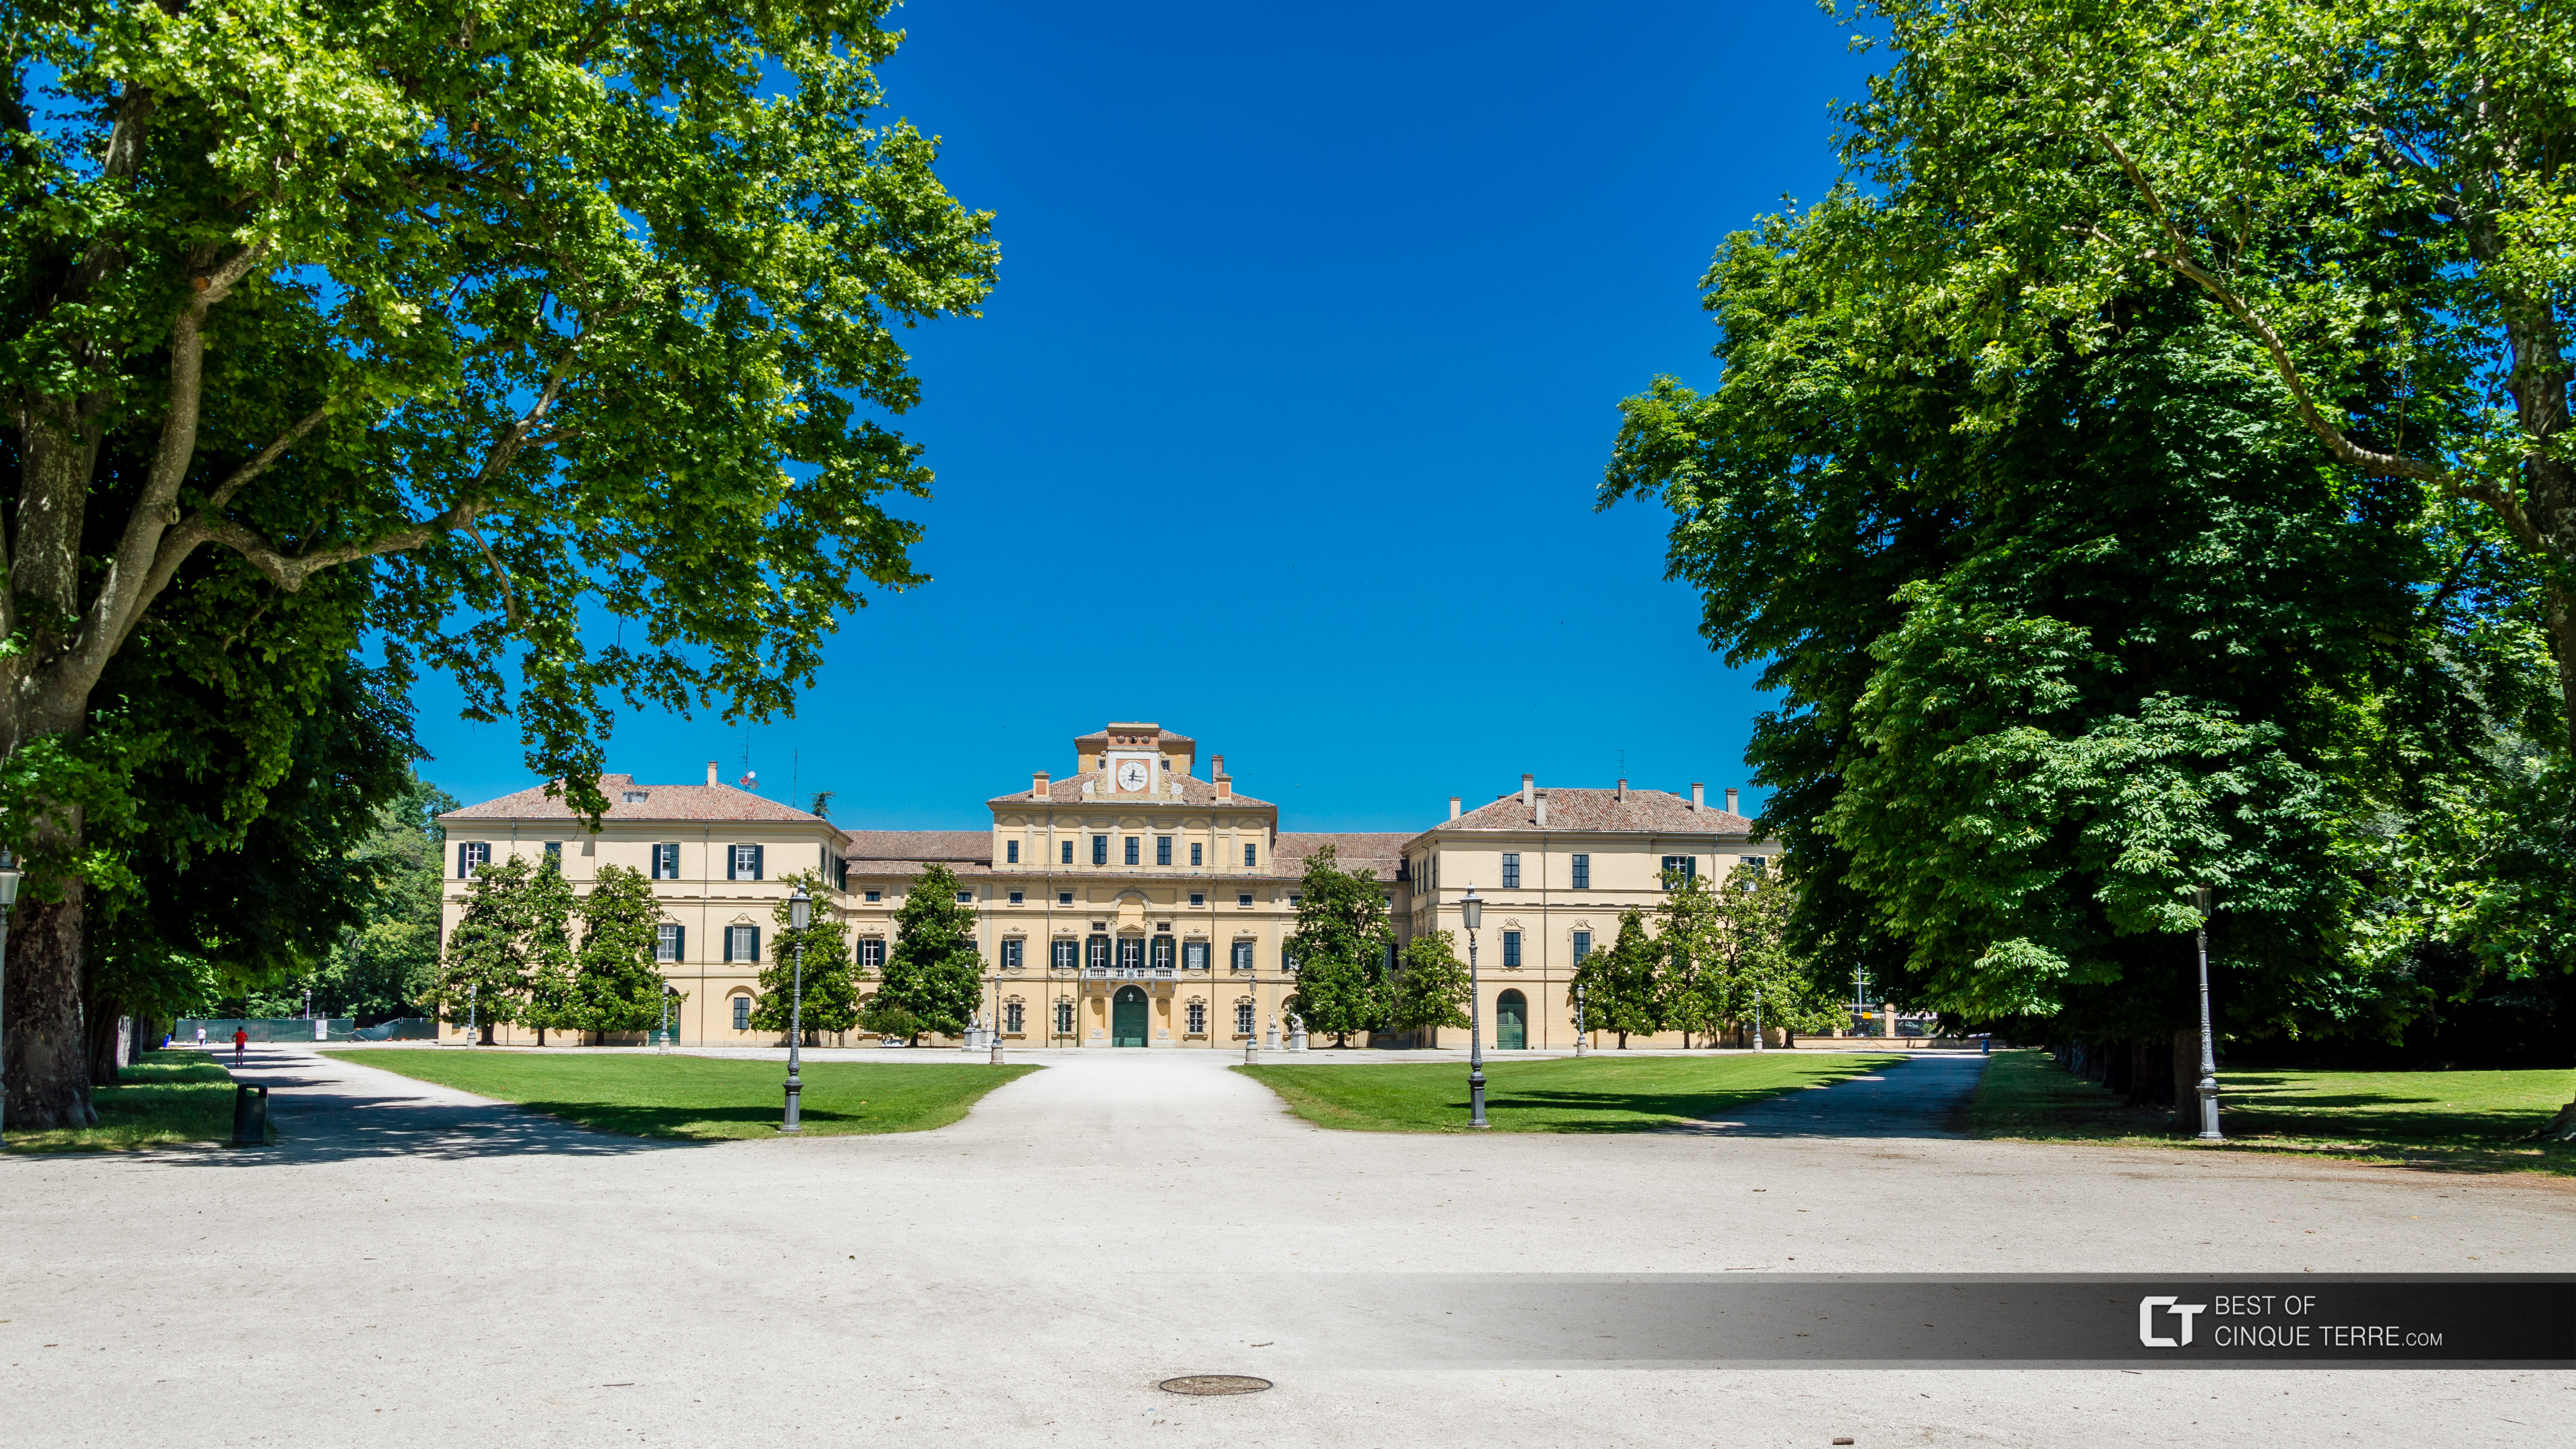 Palazzo Ducale nel Parco Ducale, Parma, Italia